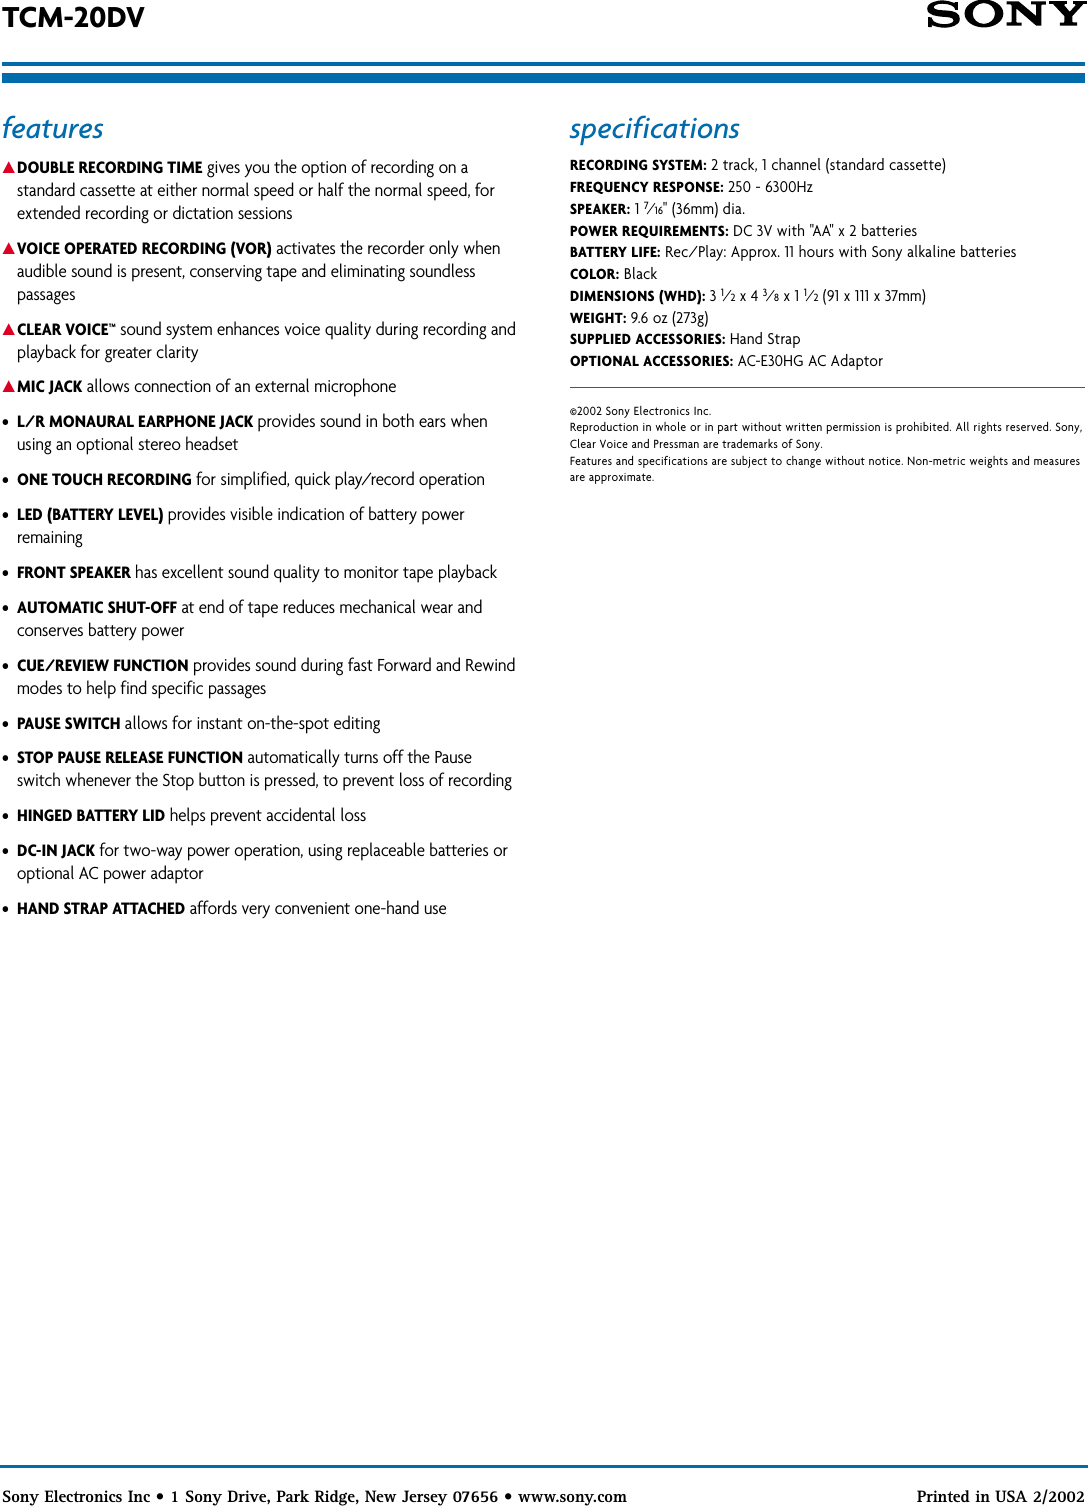 Page 2 of 2 - Sony TCM-20DV SON 907; User Manual Marketing Specifications TCM20DV Sp